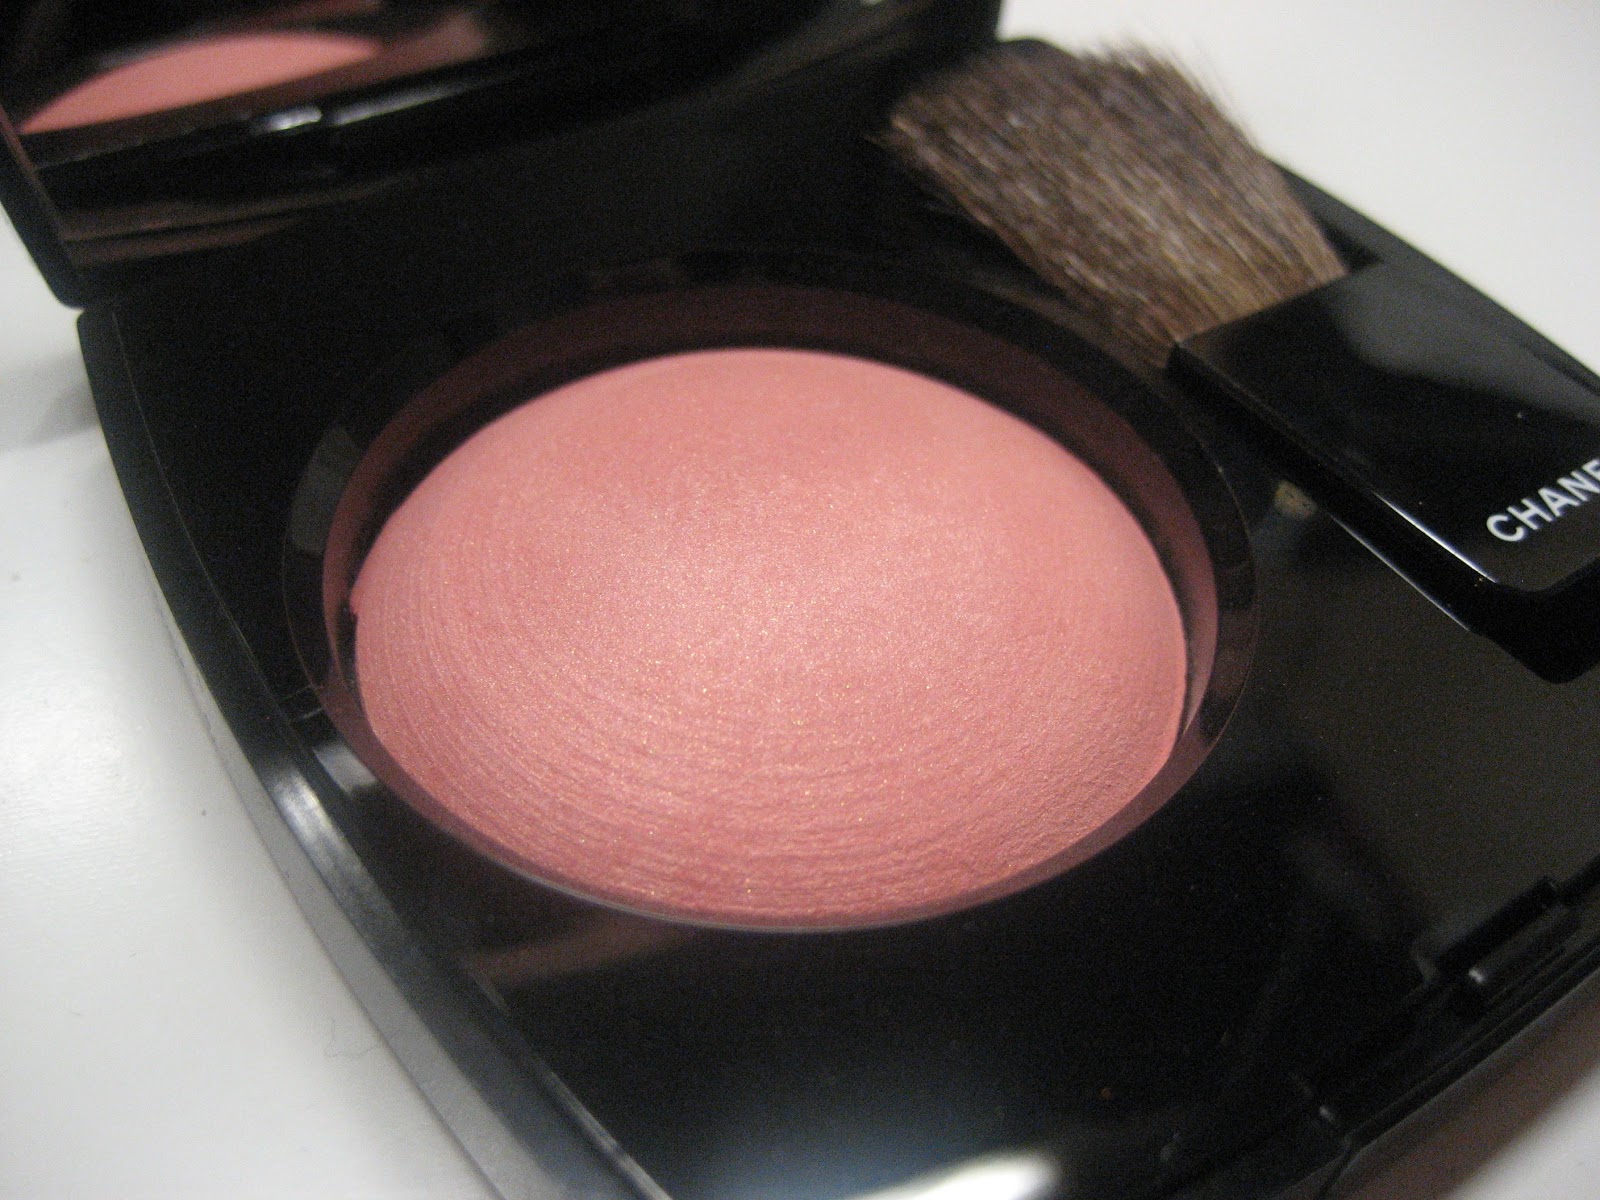 Chanel JOUES CONTRASTE Powder Blush 64 Pink Explosion